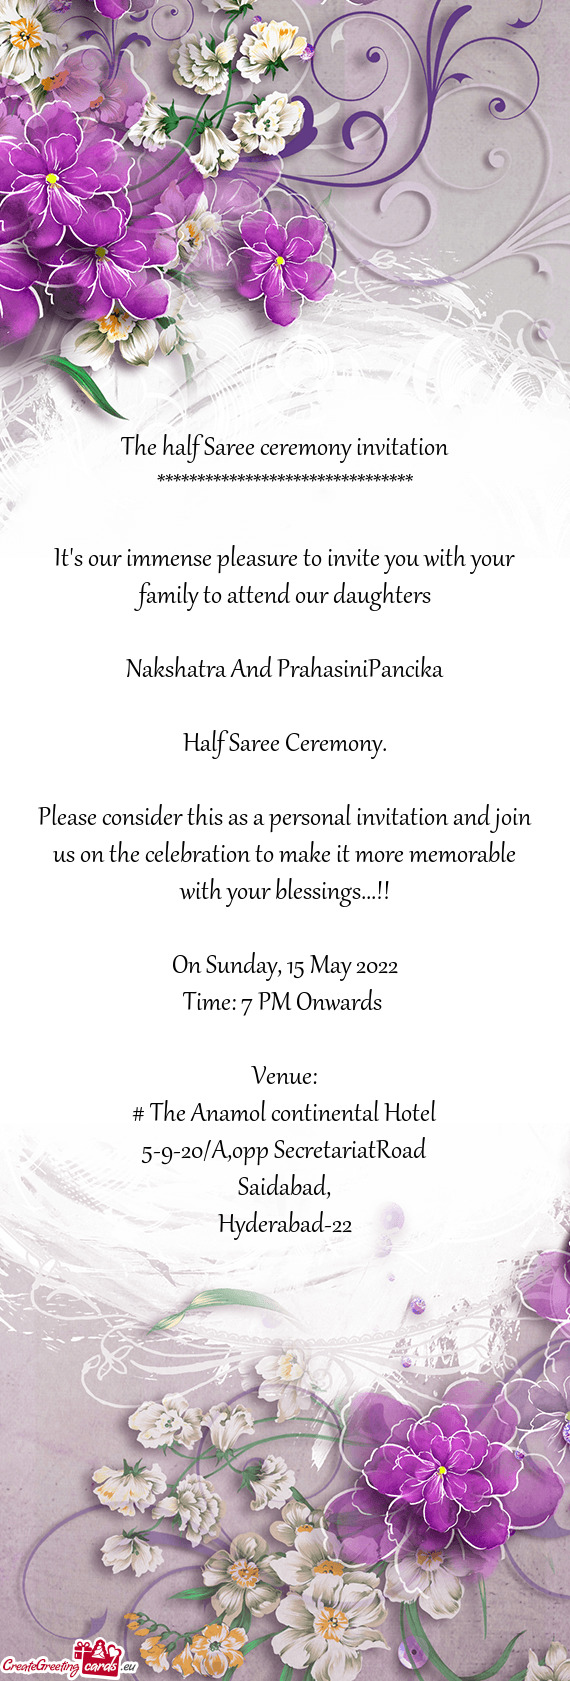 The half Saree ceremony invitation